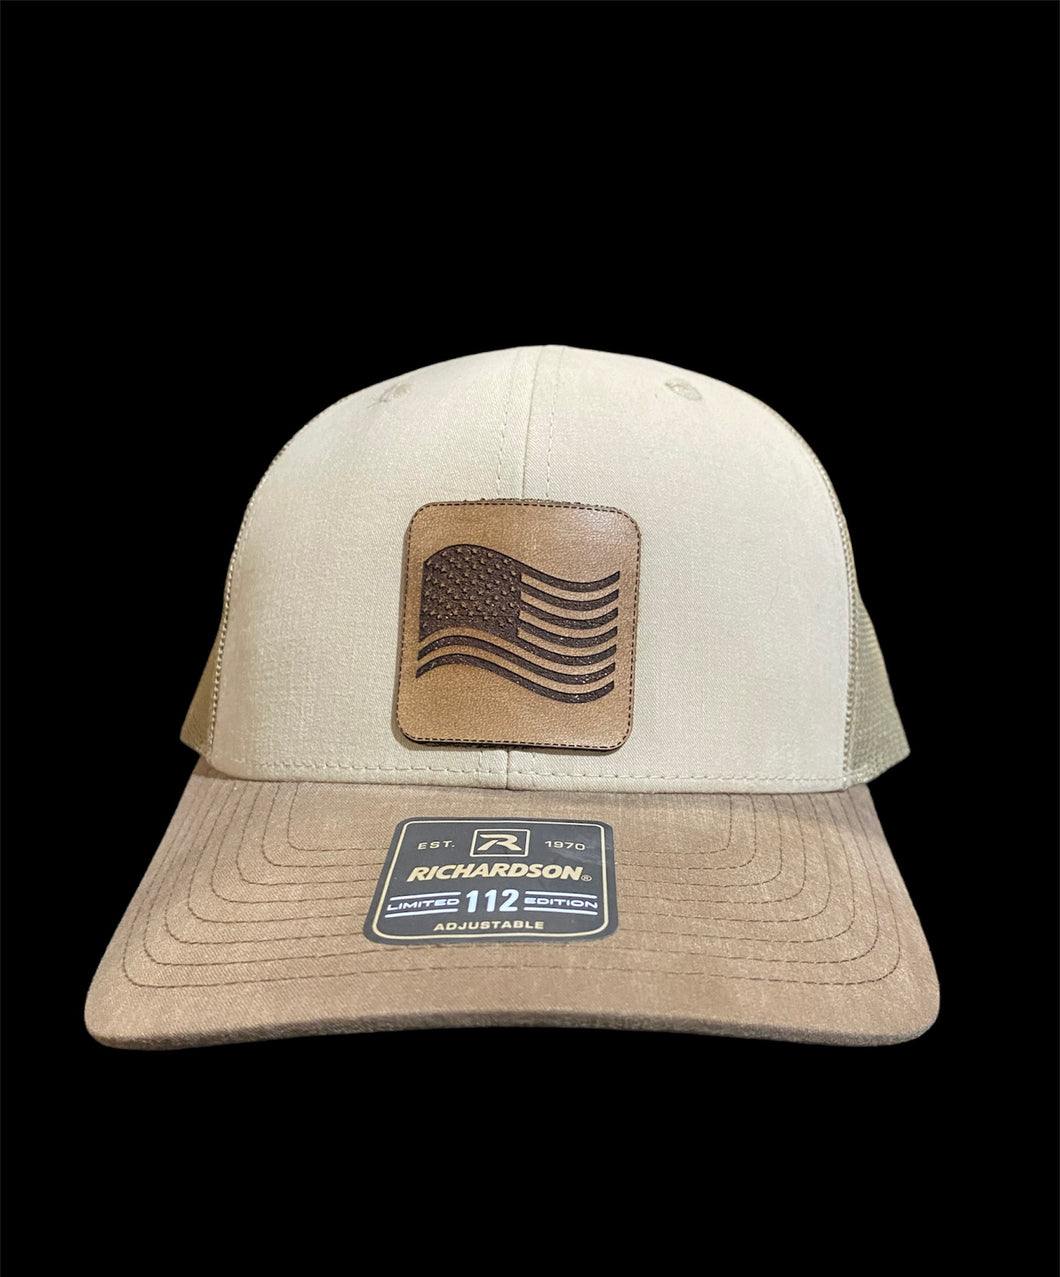 Trucker hat